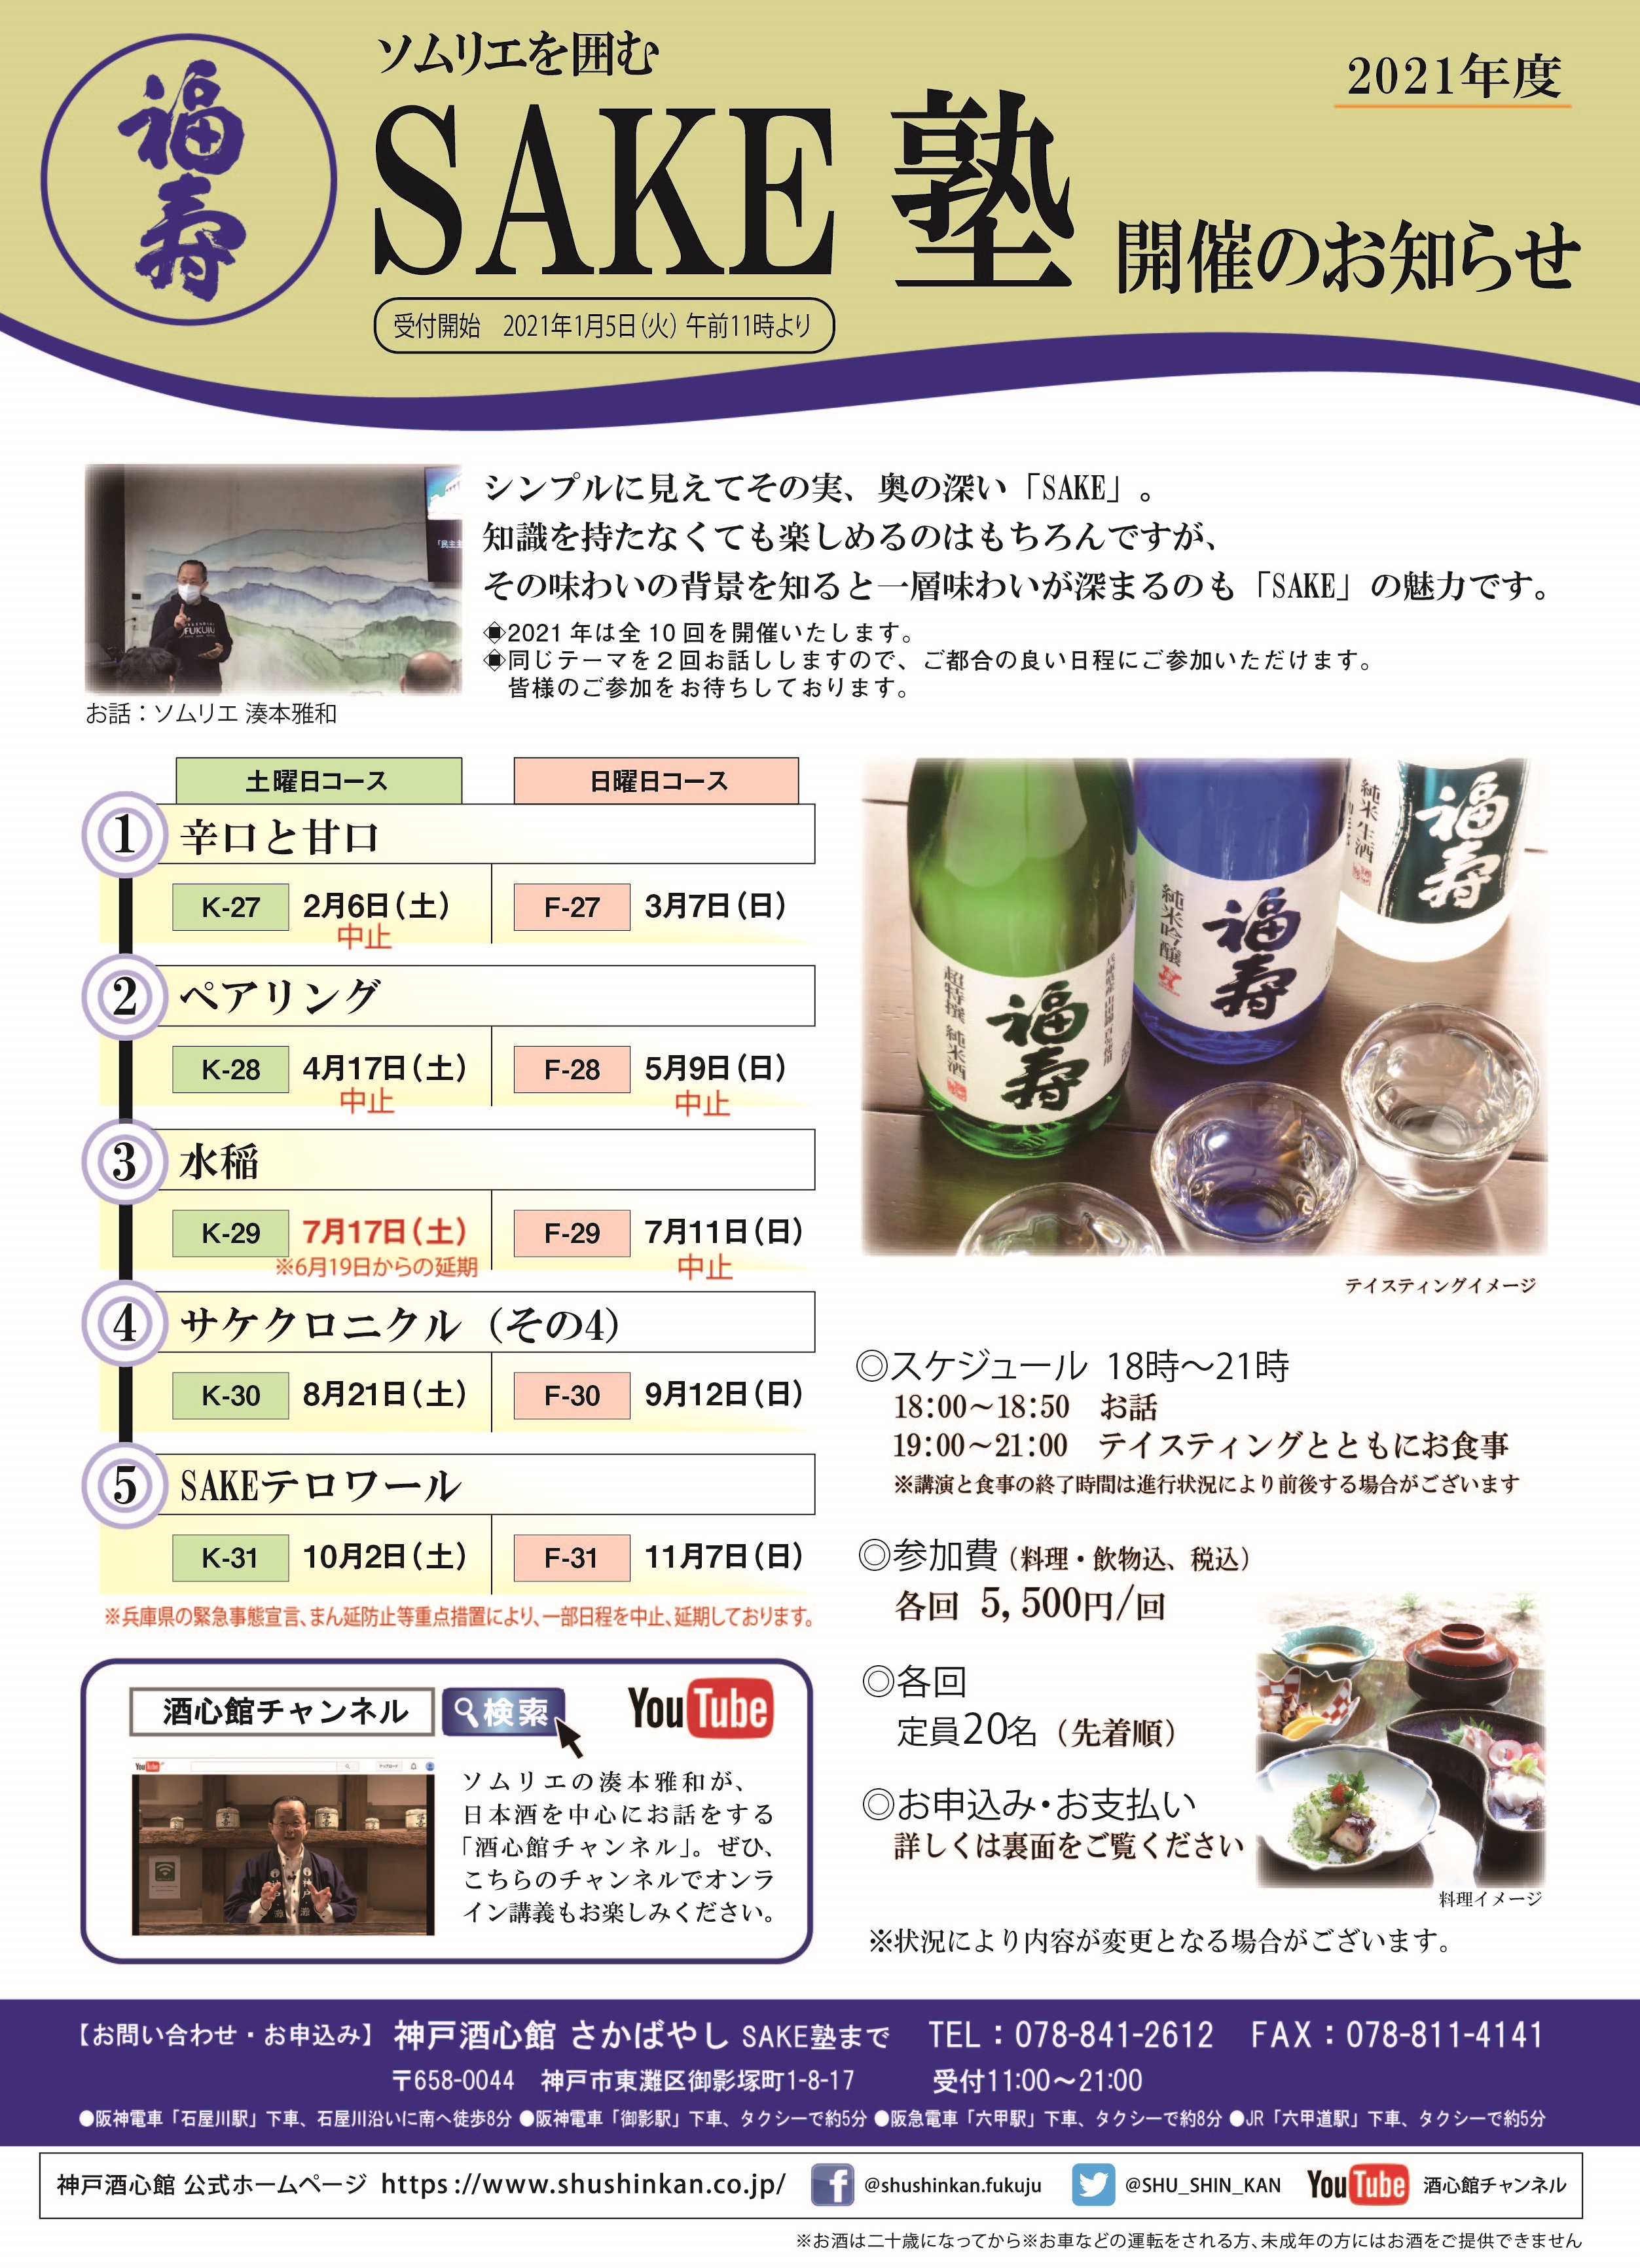 Sake塾21のご案内 新着情報 神戸酒心館